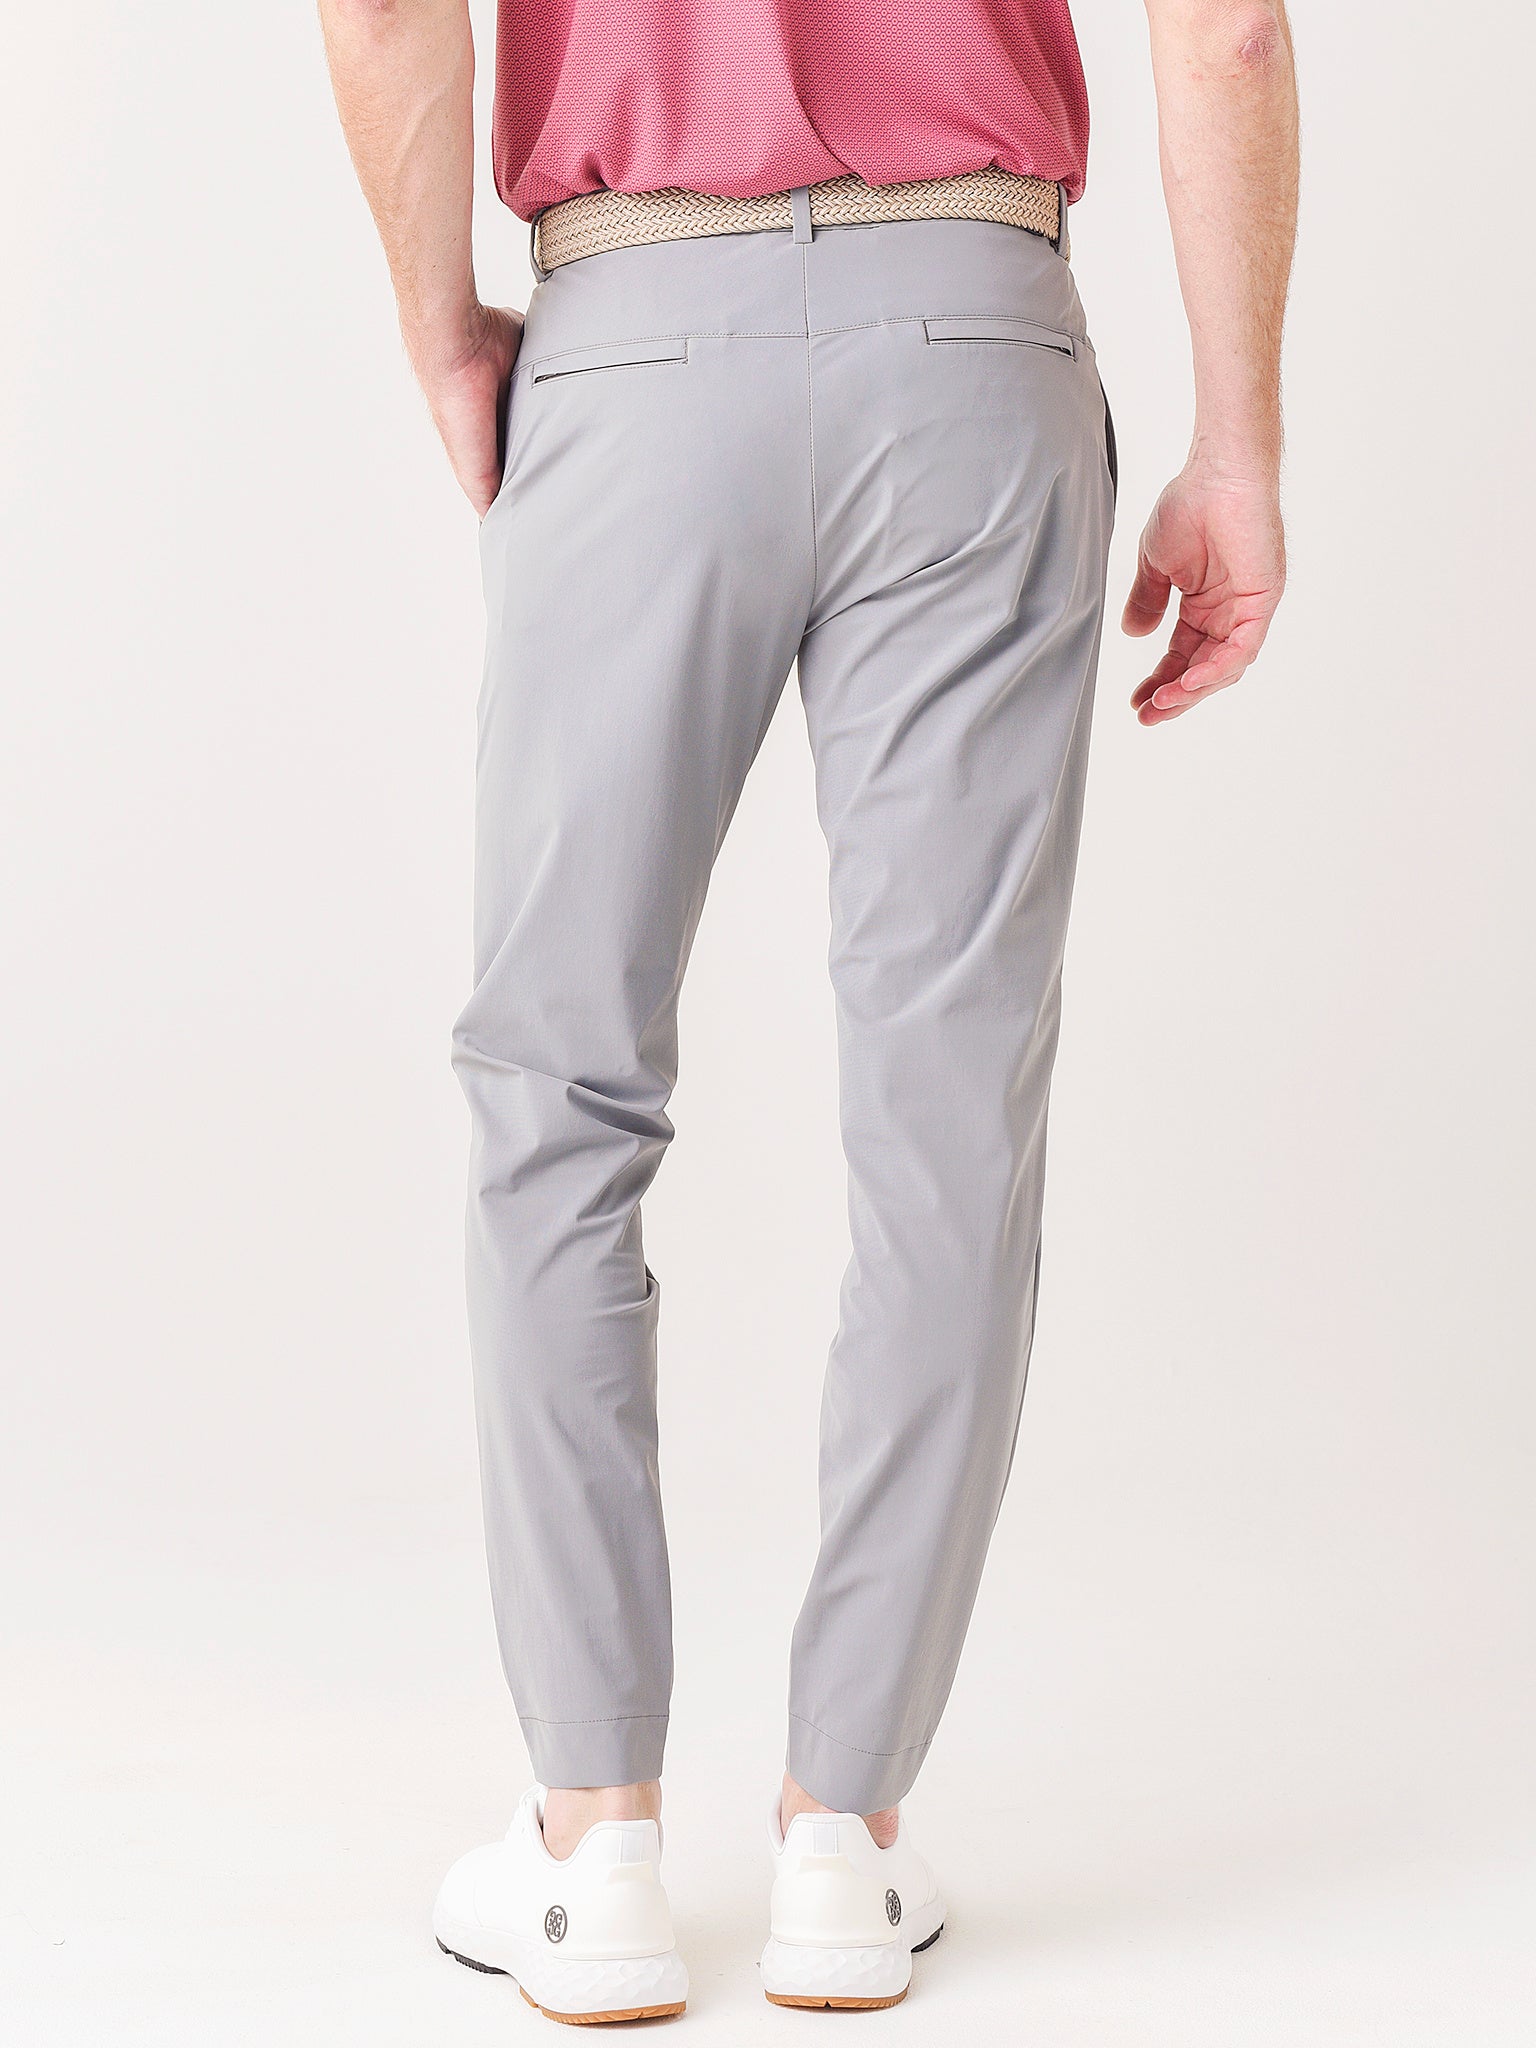 MODA NOVA Big & Tall Men's Cropped Pants Slim Fit Ankle-Length Dress Pants  White LT(US 34) - Walmart.com